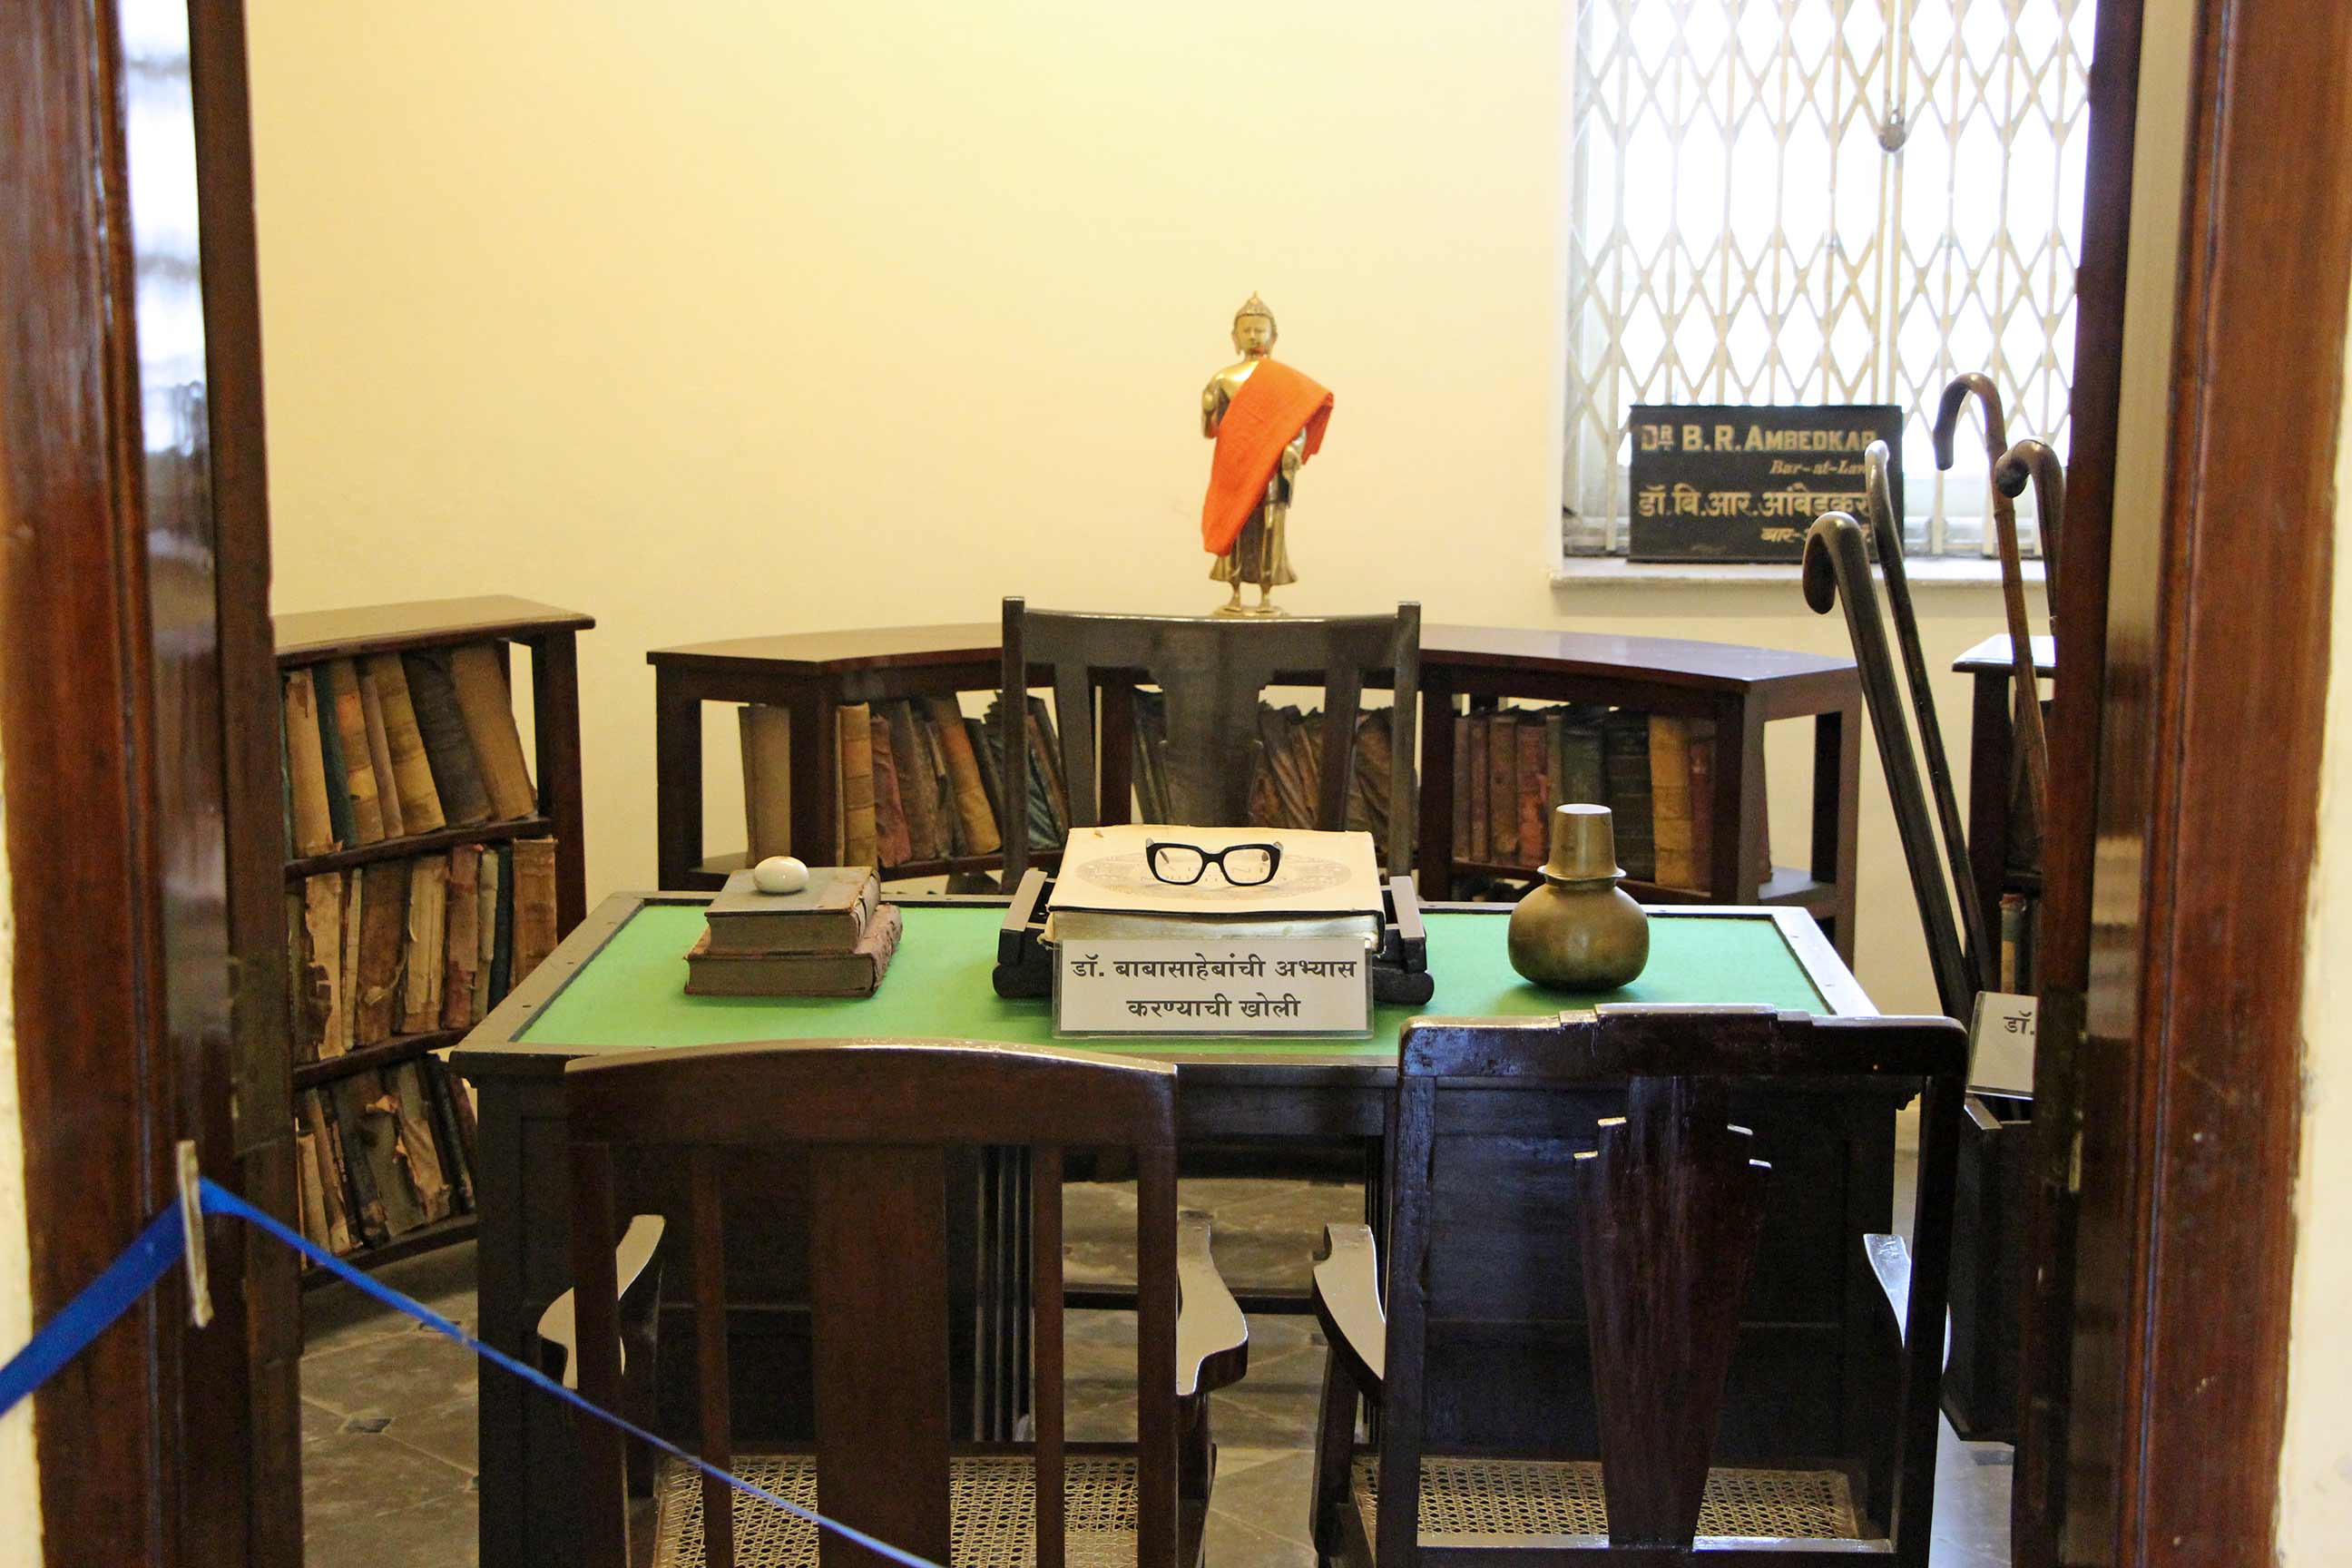 Dr. Ambedkar's desk and study